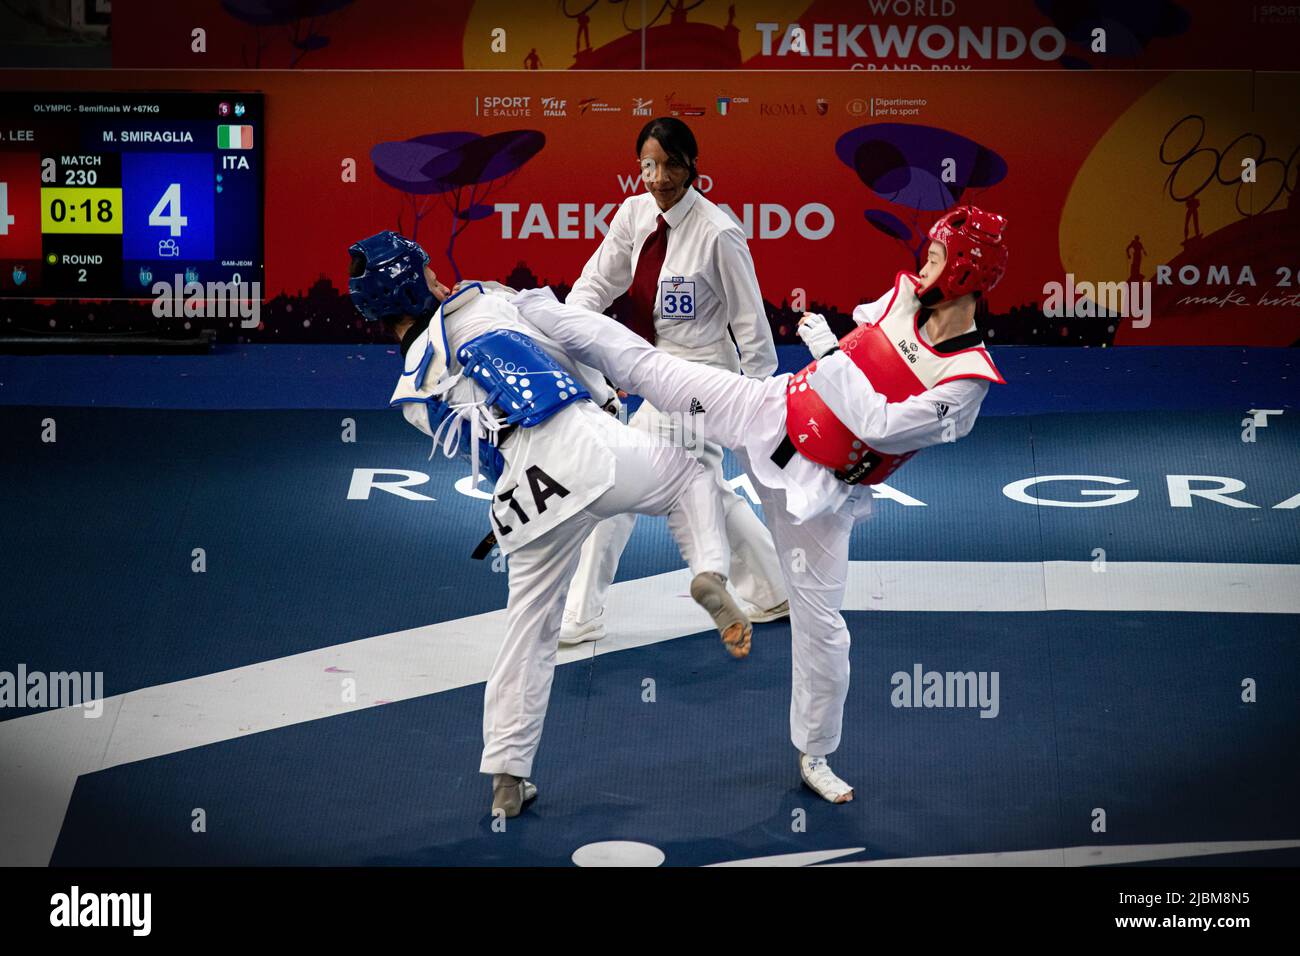 Dabin Lee campeona coreana taekwondo pateando durante el partido. Campeonato Mundial de Taekwondo, Roma, Italia, junio de 4 2022 Foto de stock